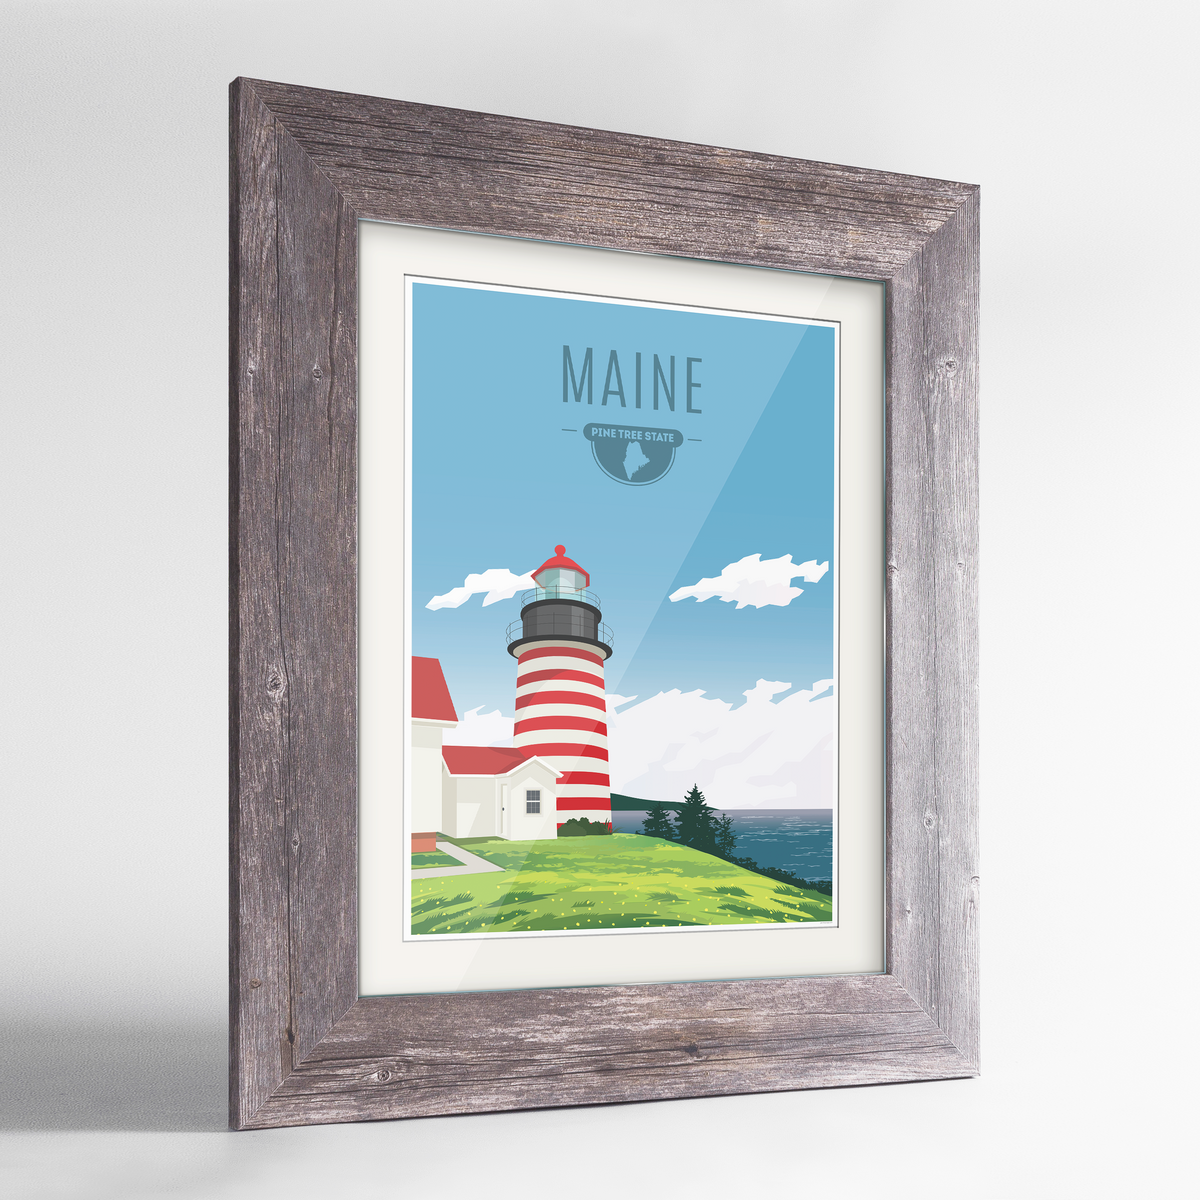 Maine State Frame Print